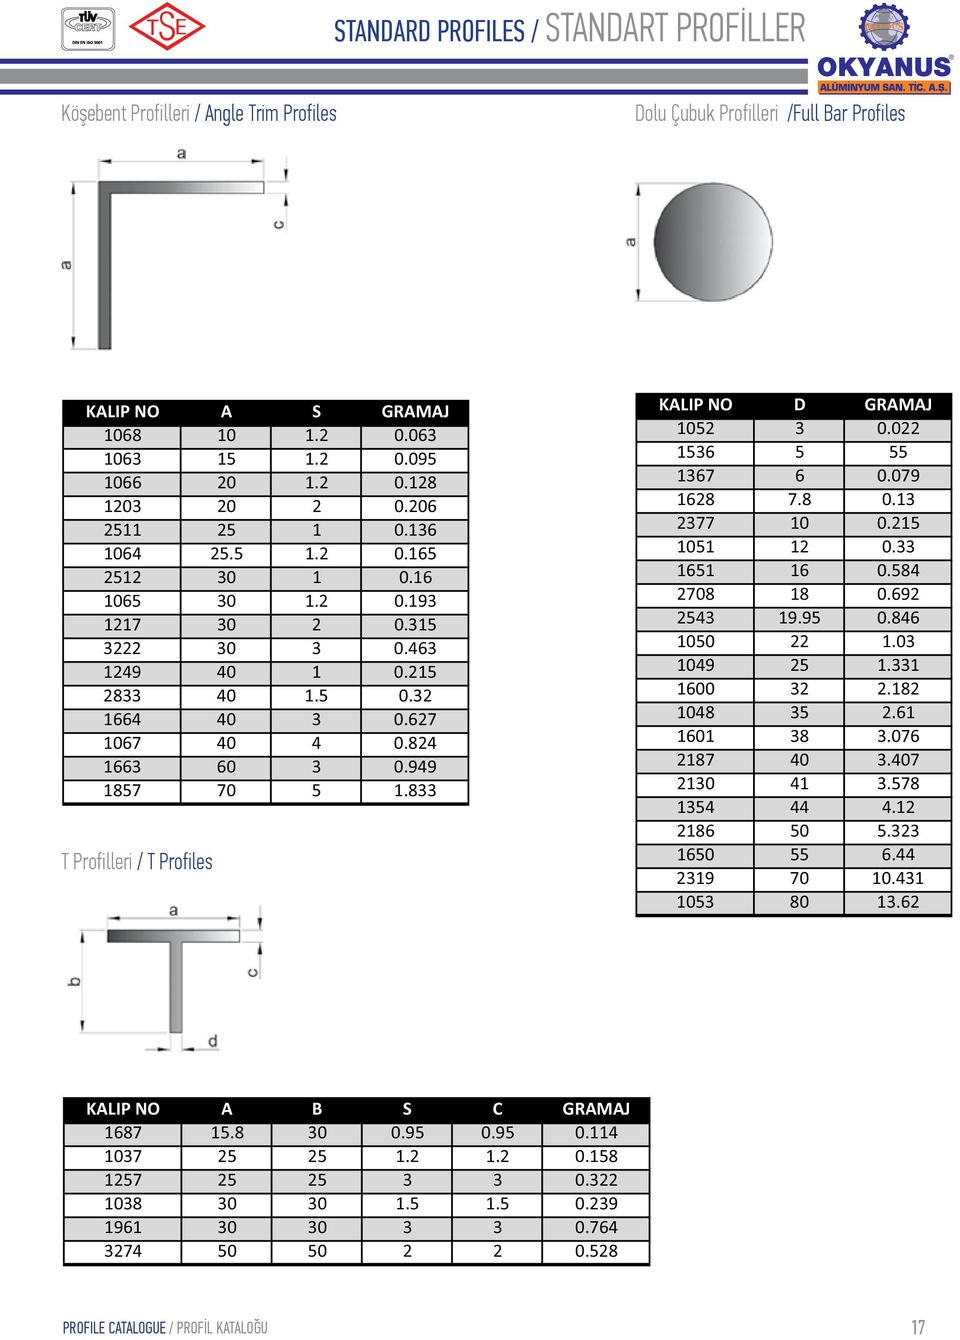 Çubuk Profilleri /Full Bar Profiles T